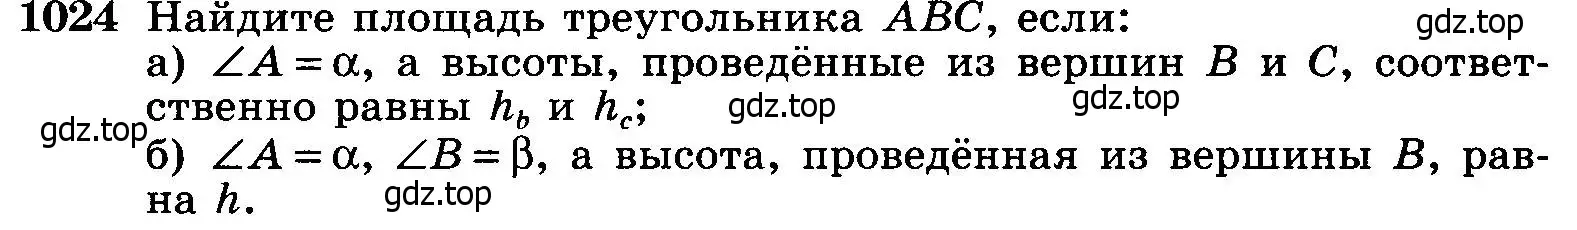 Условие номер 1024 (страница 257) гдз по геометрии 7-9 класс Атанасян, Бутузов, учебник